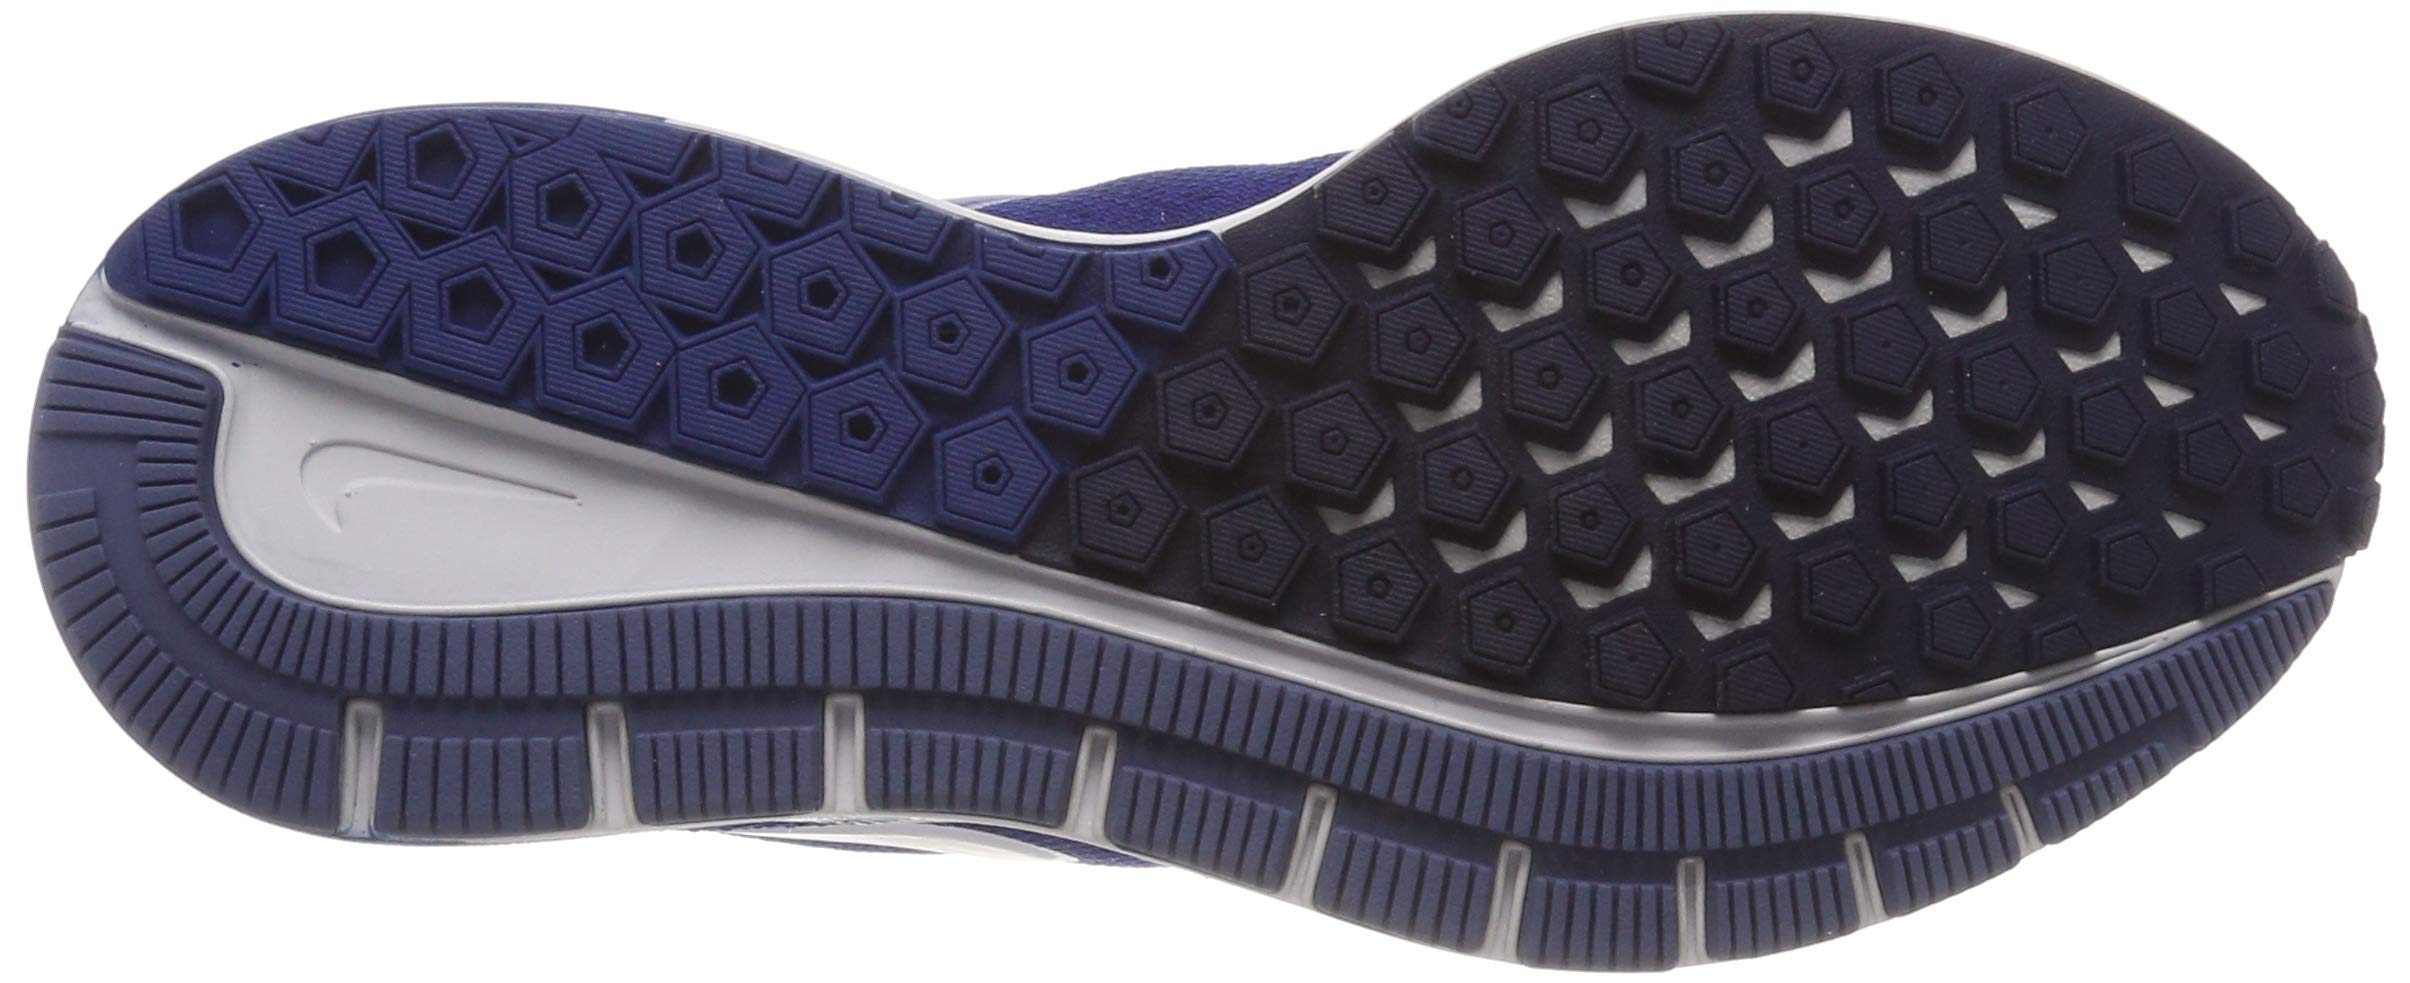 Nike AA1636-404: Men's Air Zoom Structure 22 Blue Void/Vast Grey/Gym Blue Shoe (10.5 D(M) US Men) - image 4 of 7